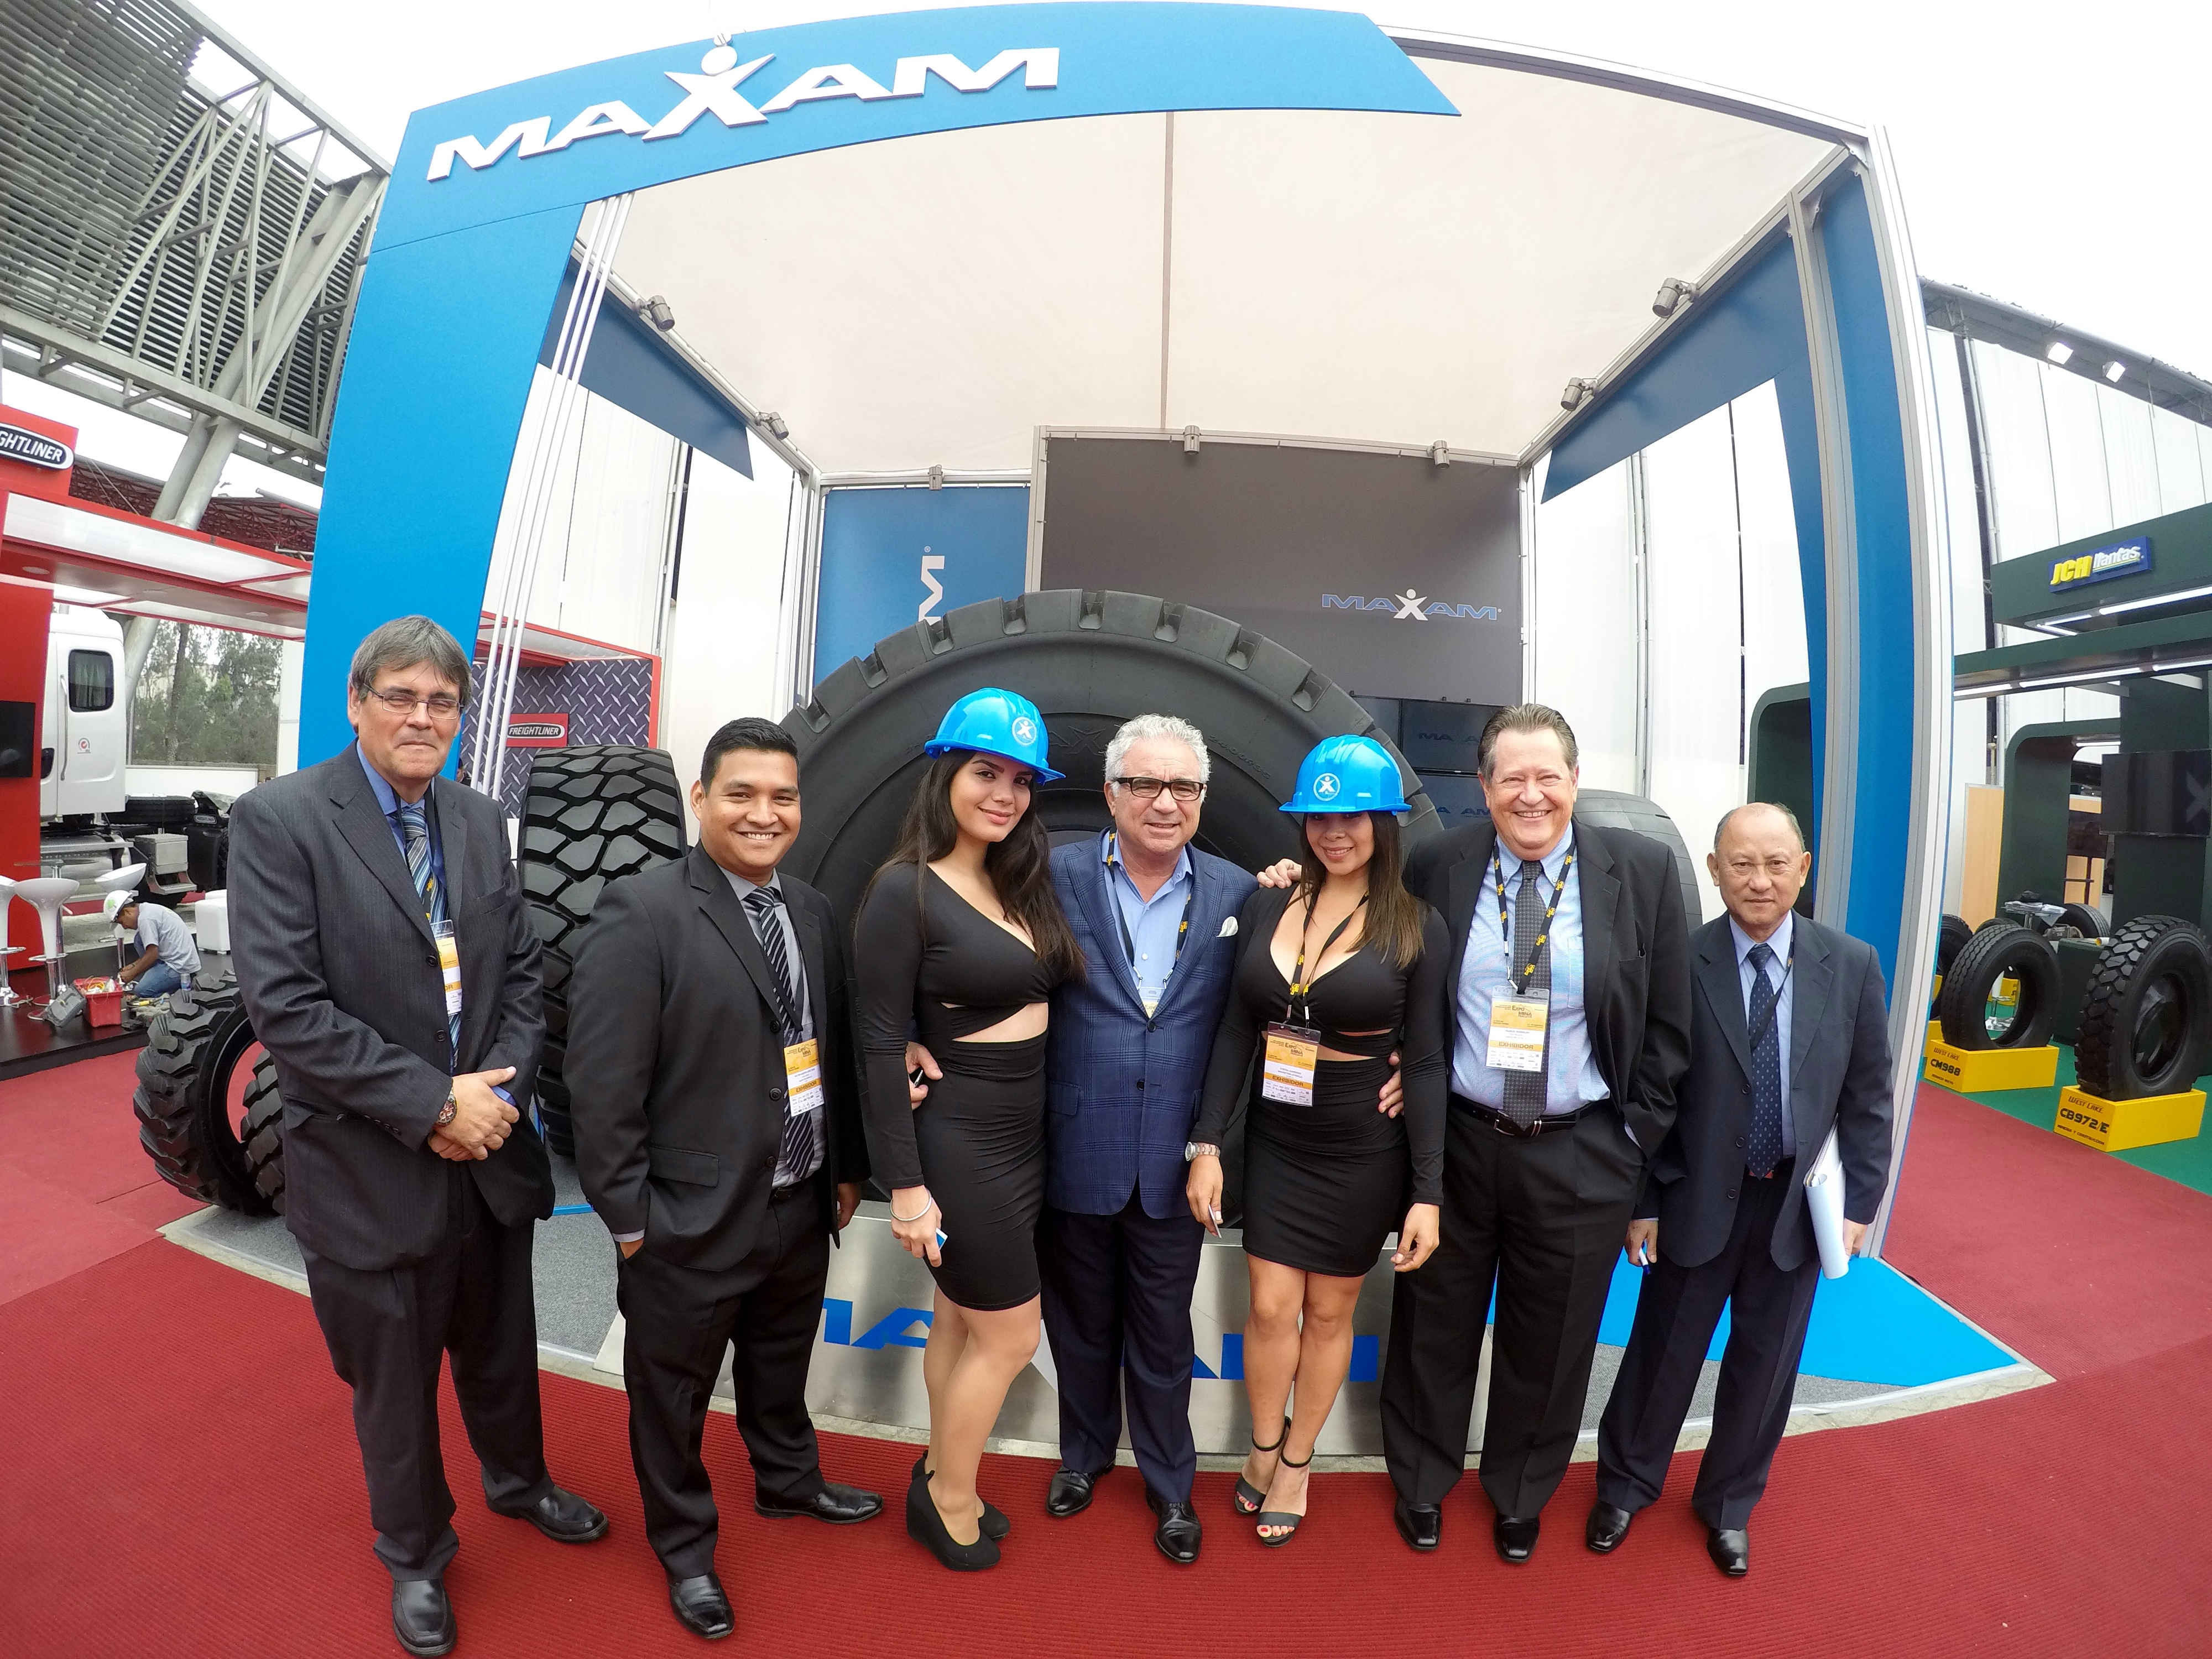 Maxam makes ‘great impact’ at Expomina in Lima, Peru